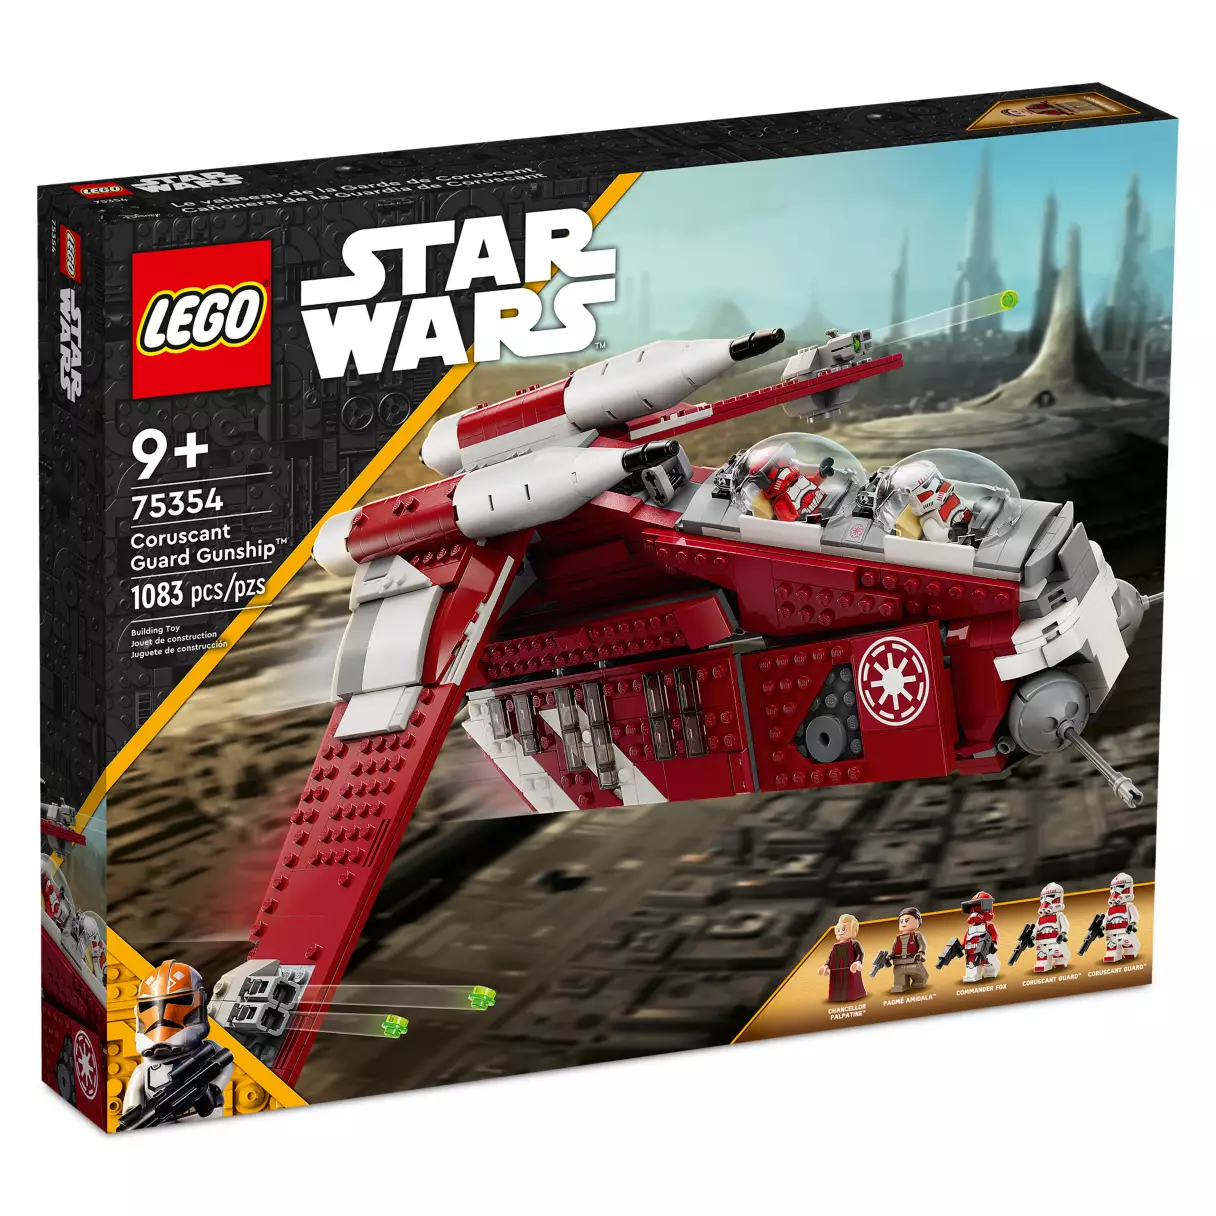 SW Coruscant Guard Gunship Lego Set 1